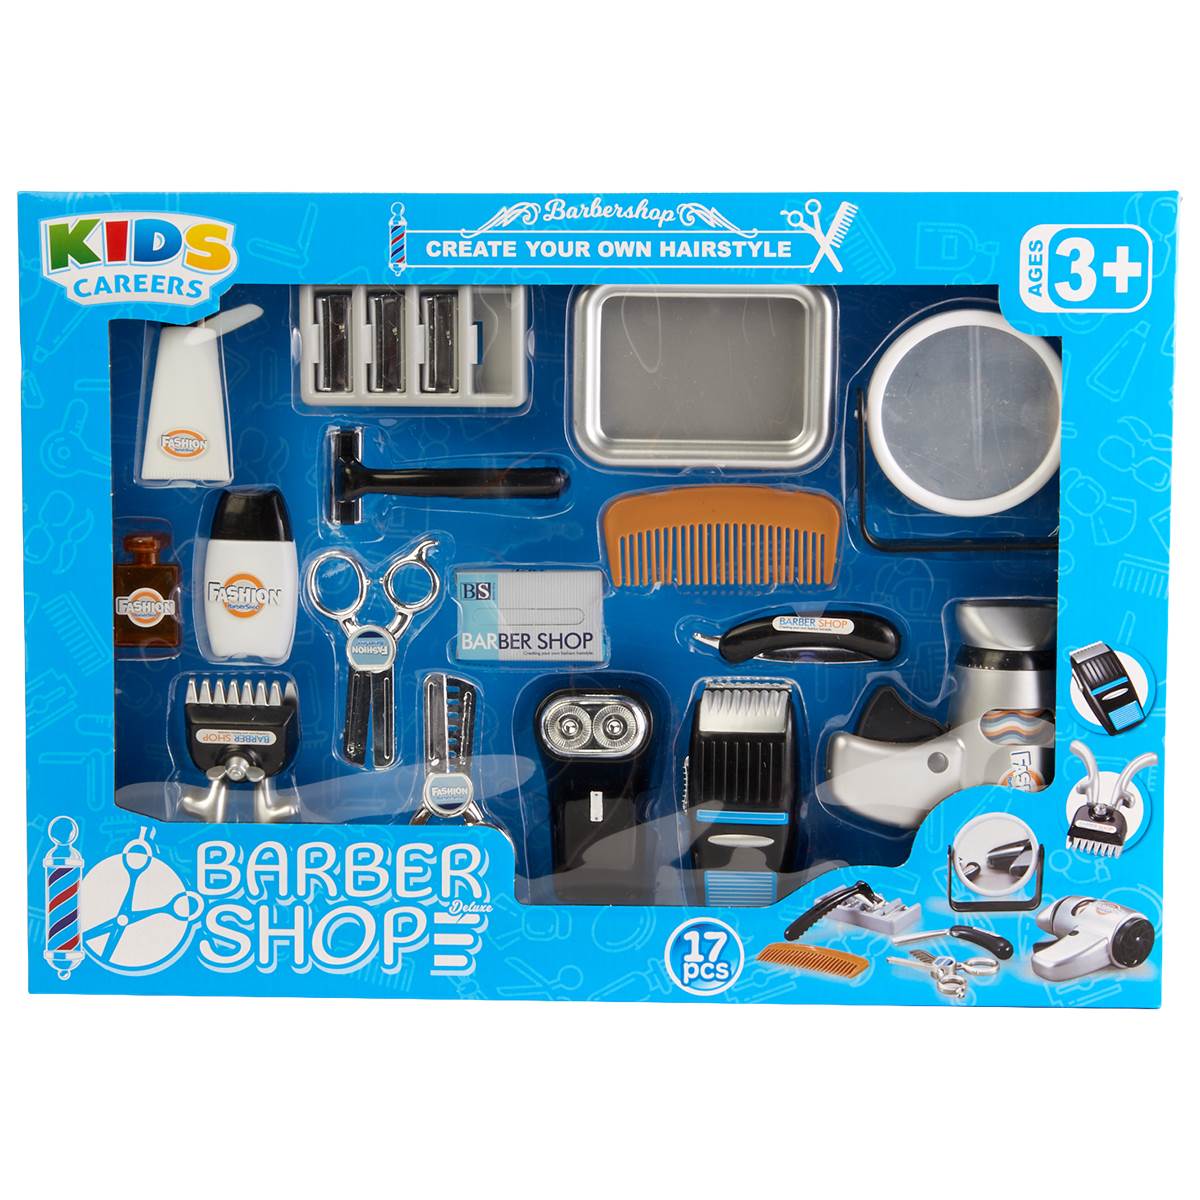 Kids Careers Deluxe Barbershop Toy Set